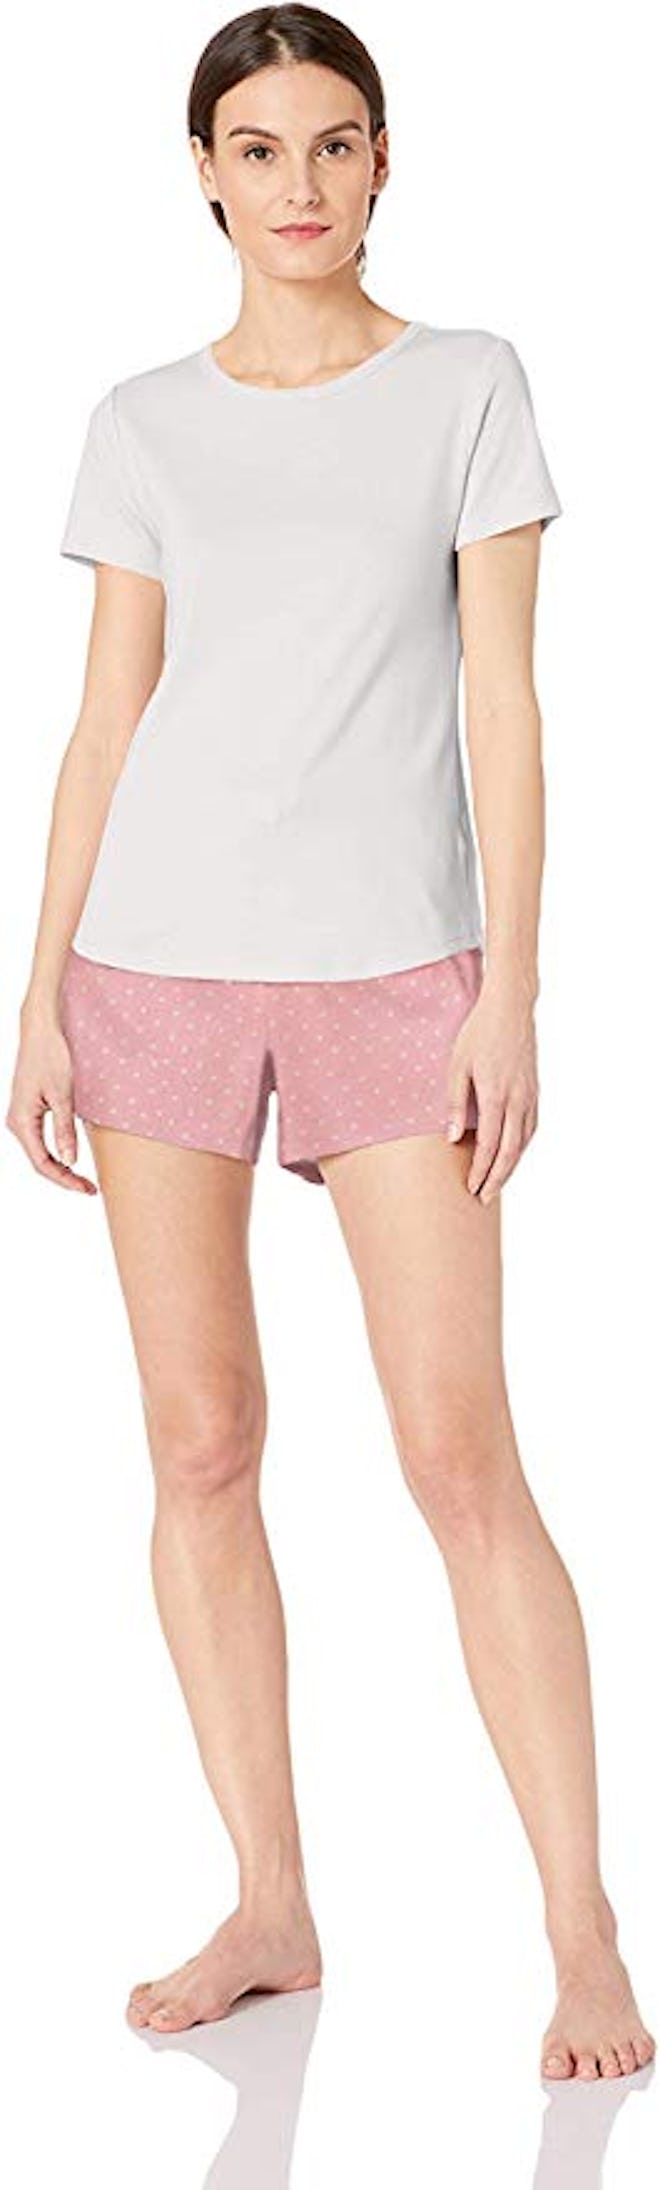 Amazon Essentials Flannel Short And Cotton T-Shirt Sleep Set